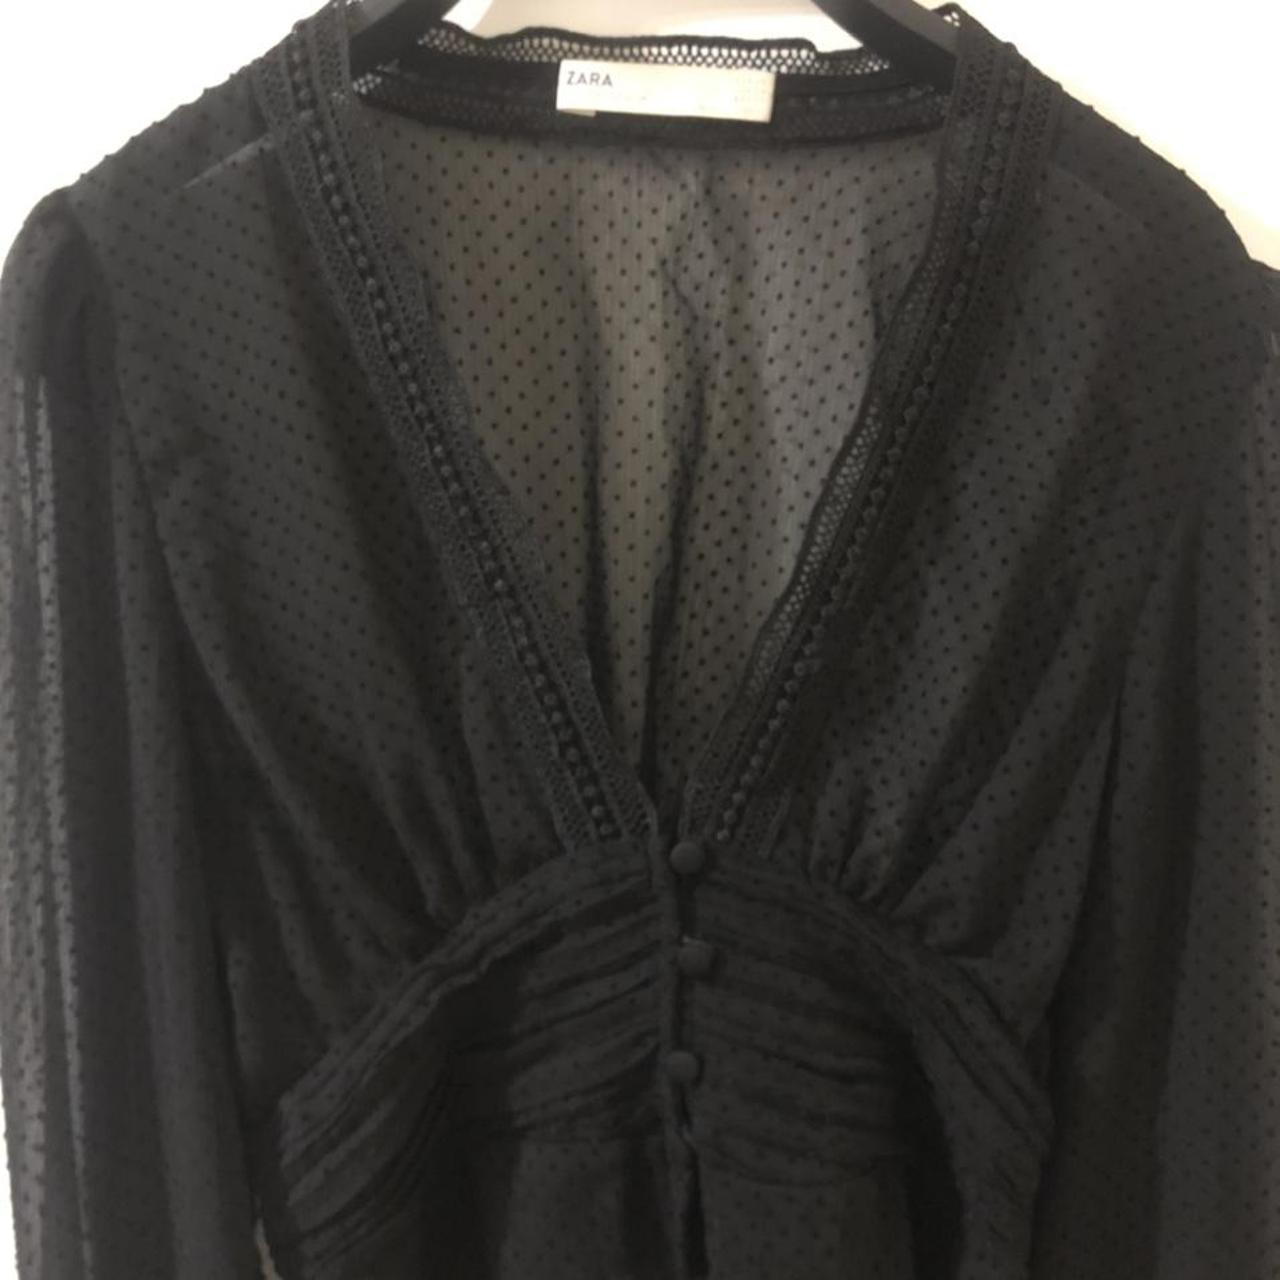 Zara black seethrough blouse. Buttons along the... - Depop